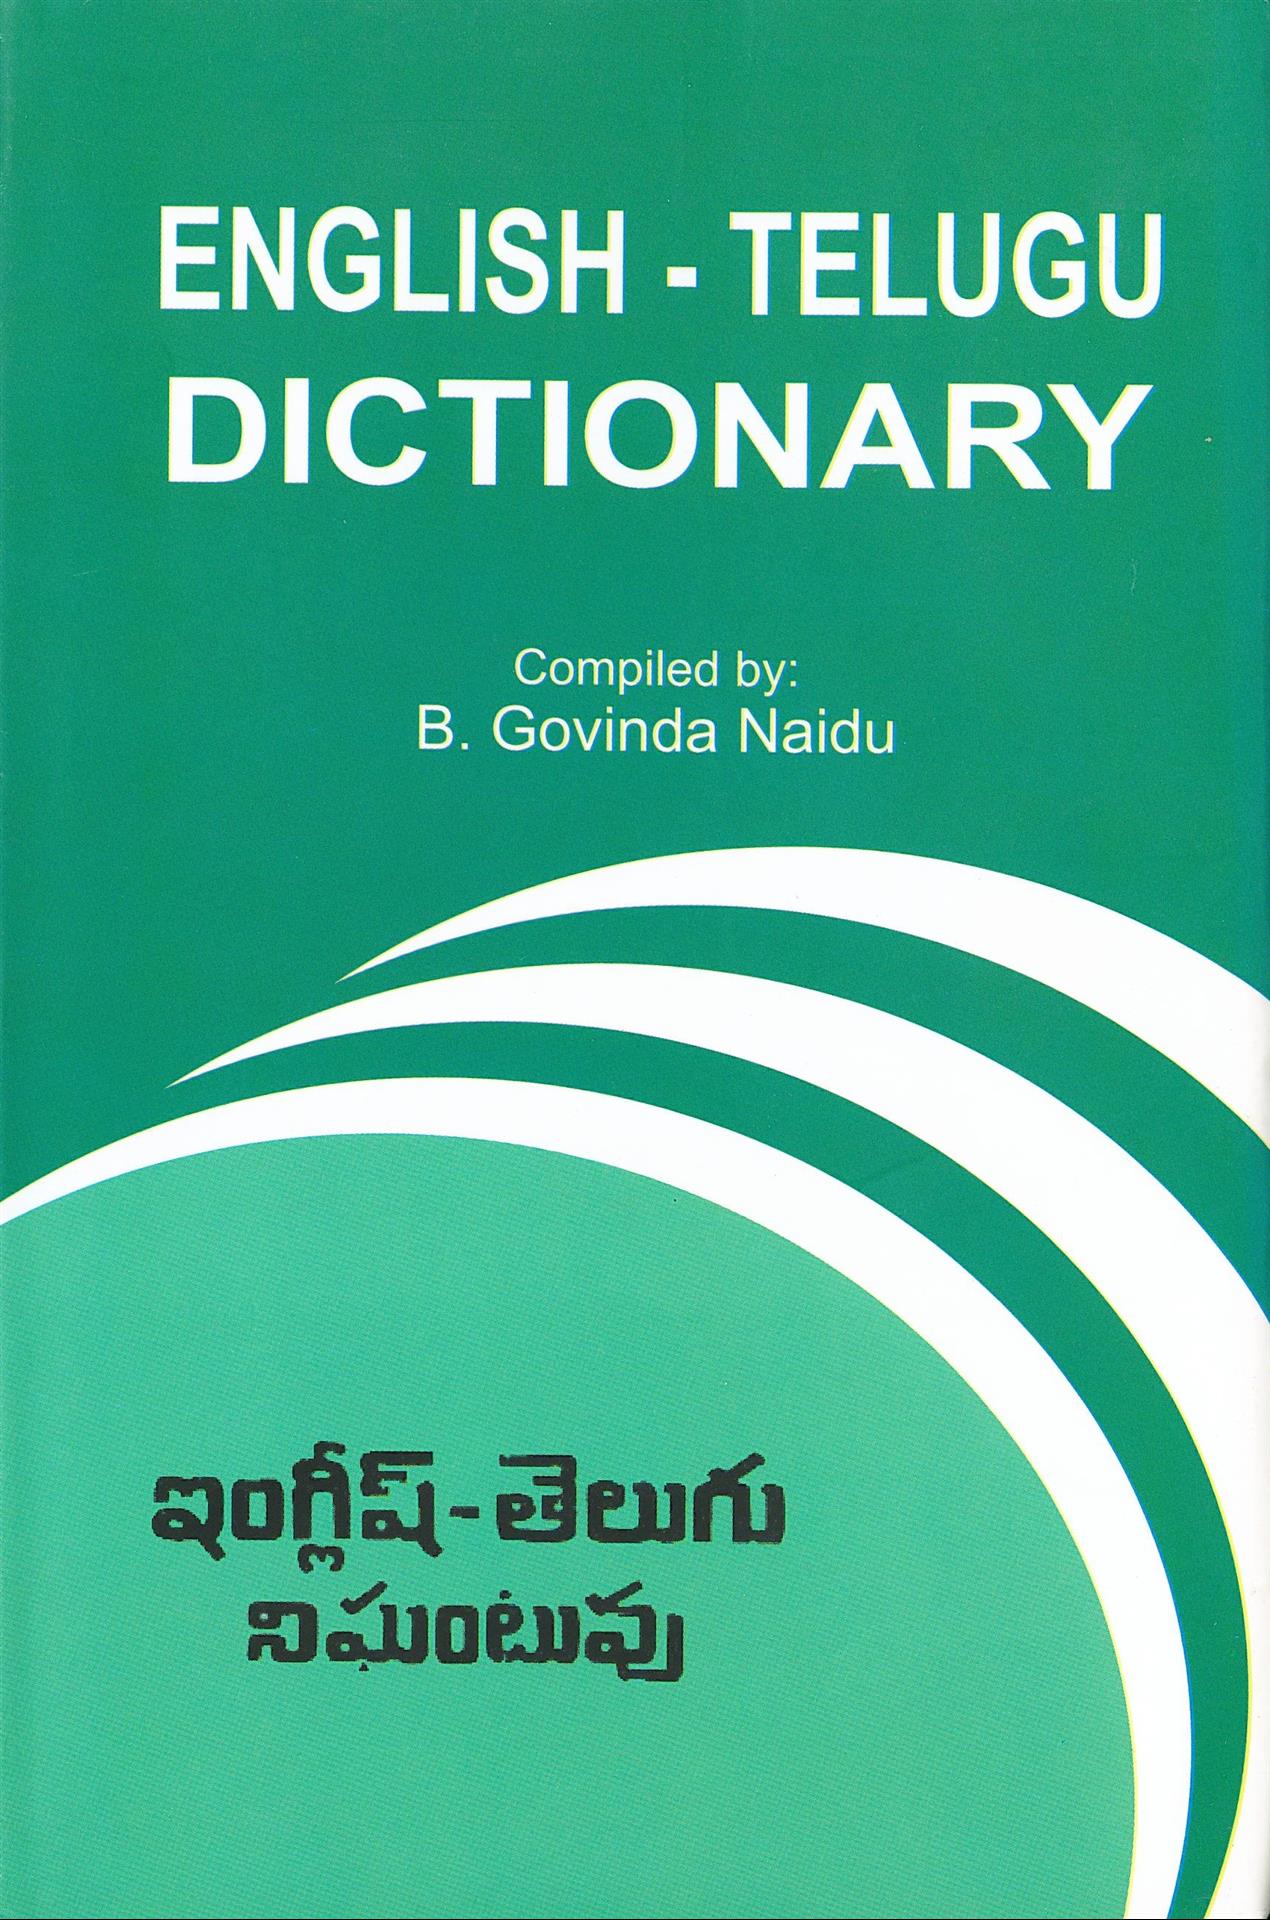 English Telugu Dictionary | Educavision Inc.